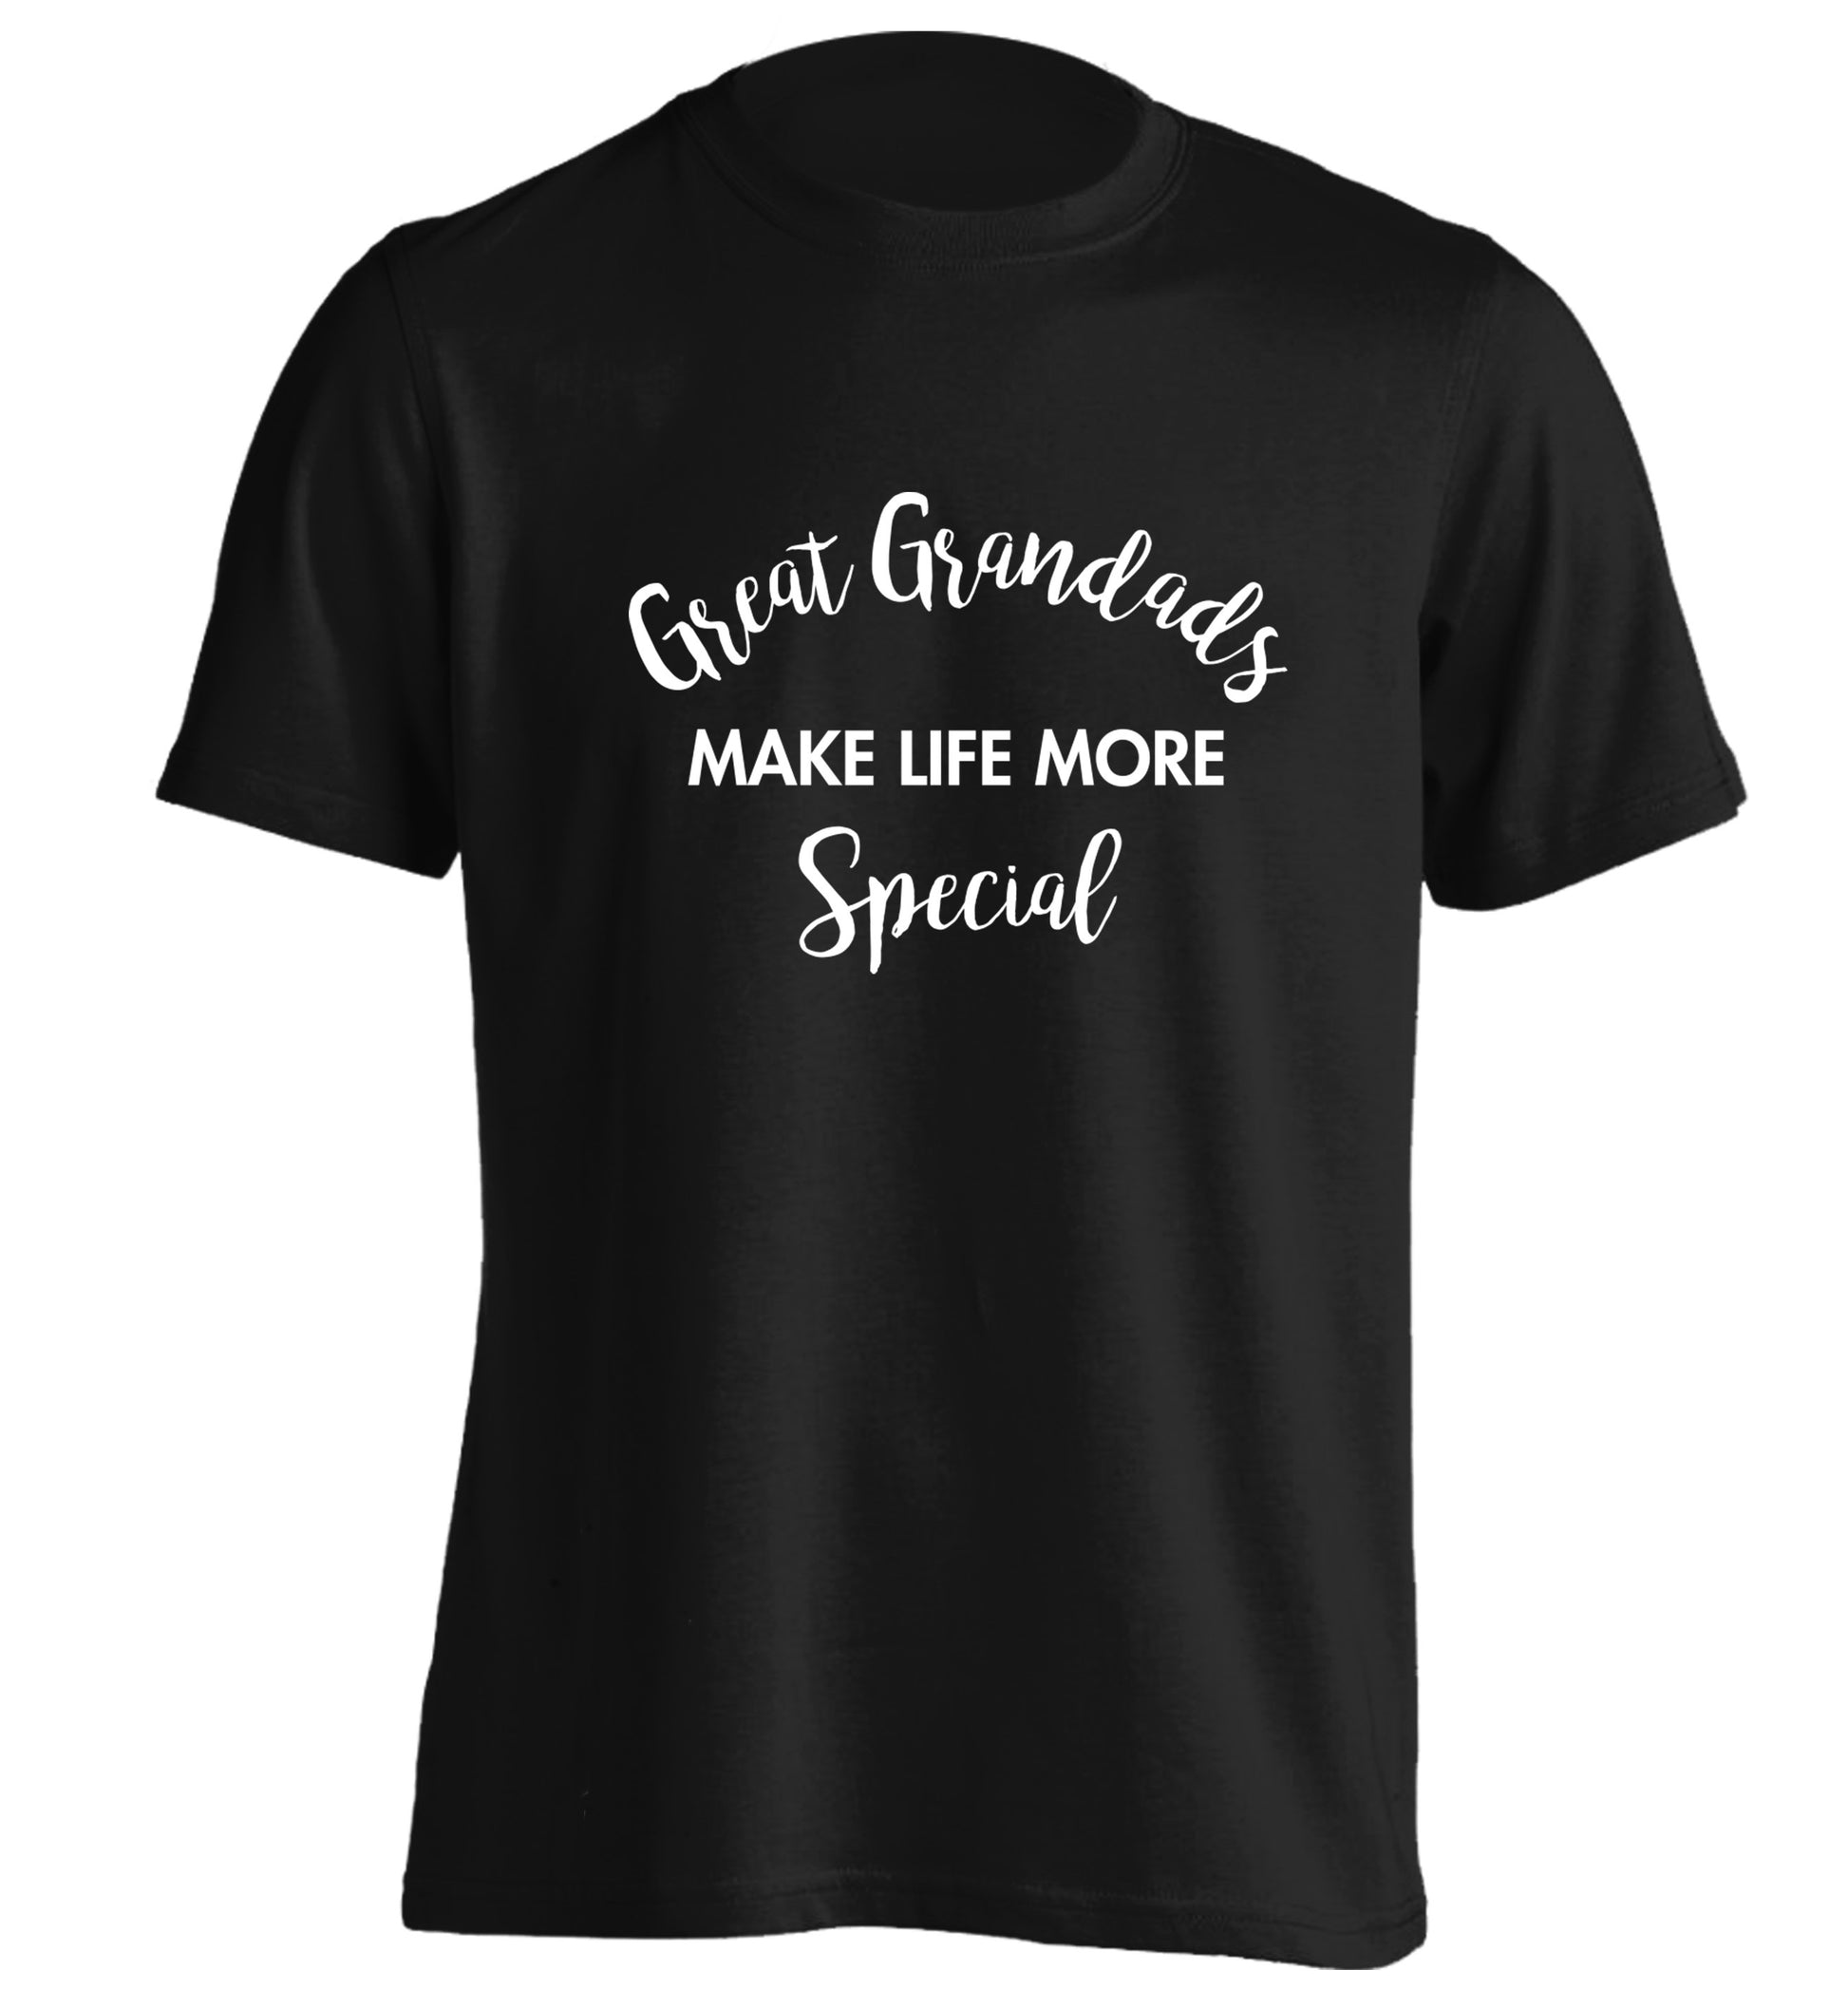 Great Grandads make life more special adults unisex black Tshirt 2XL